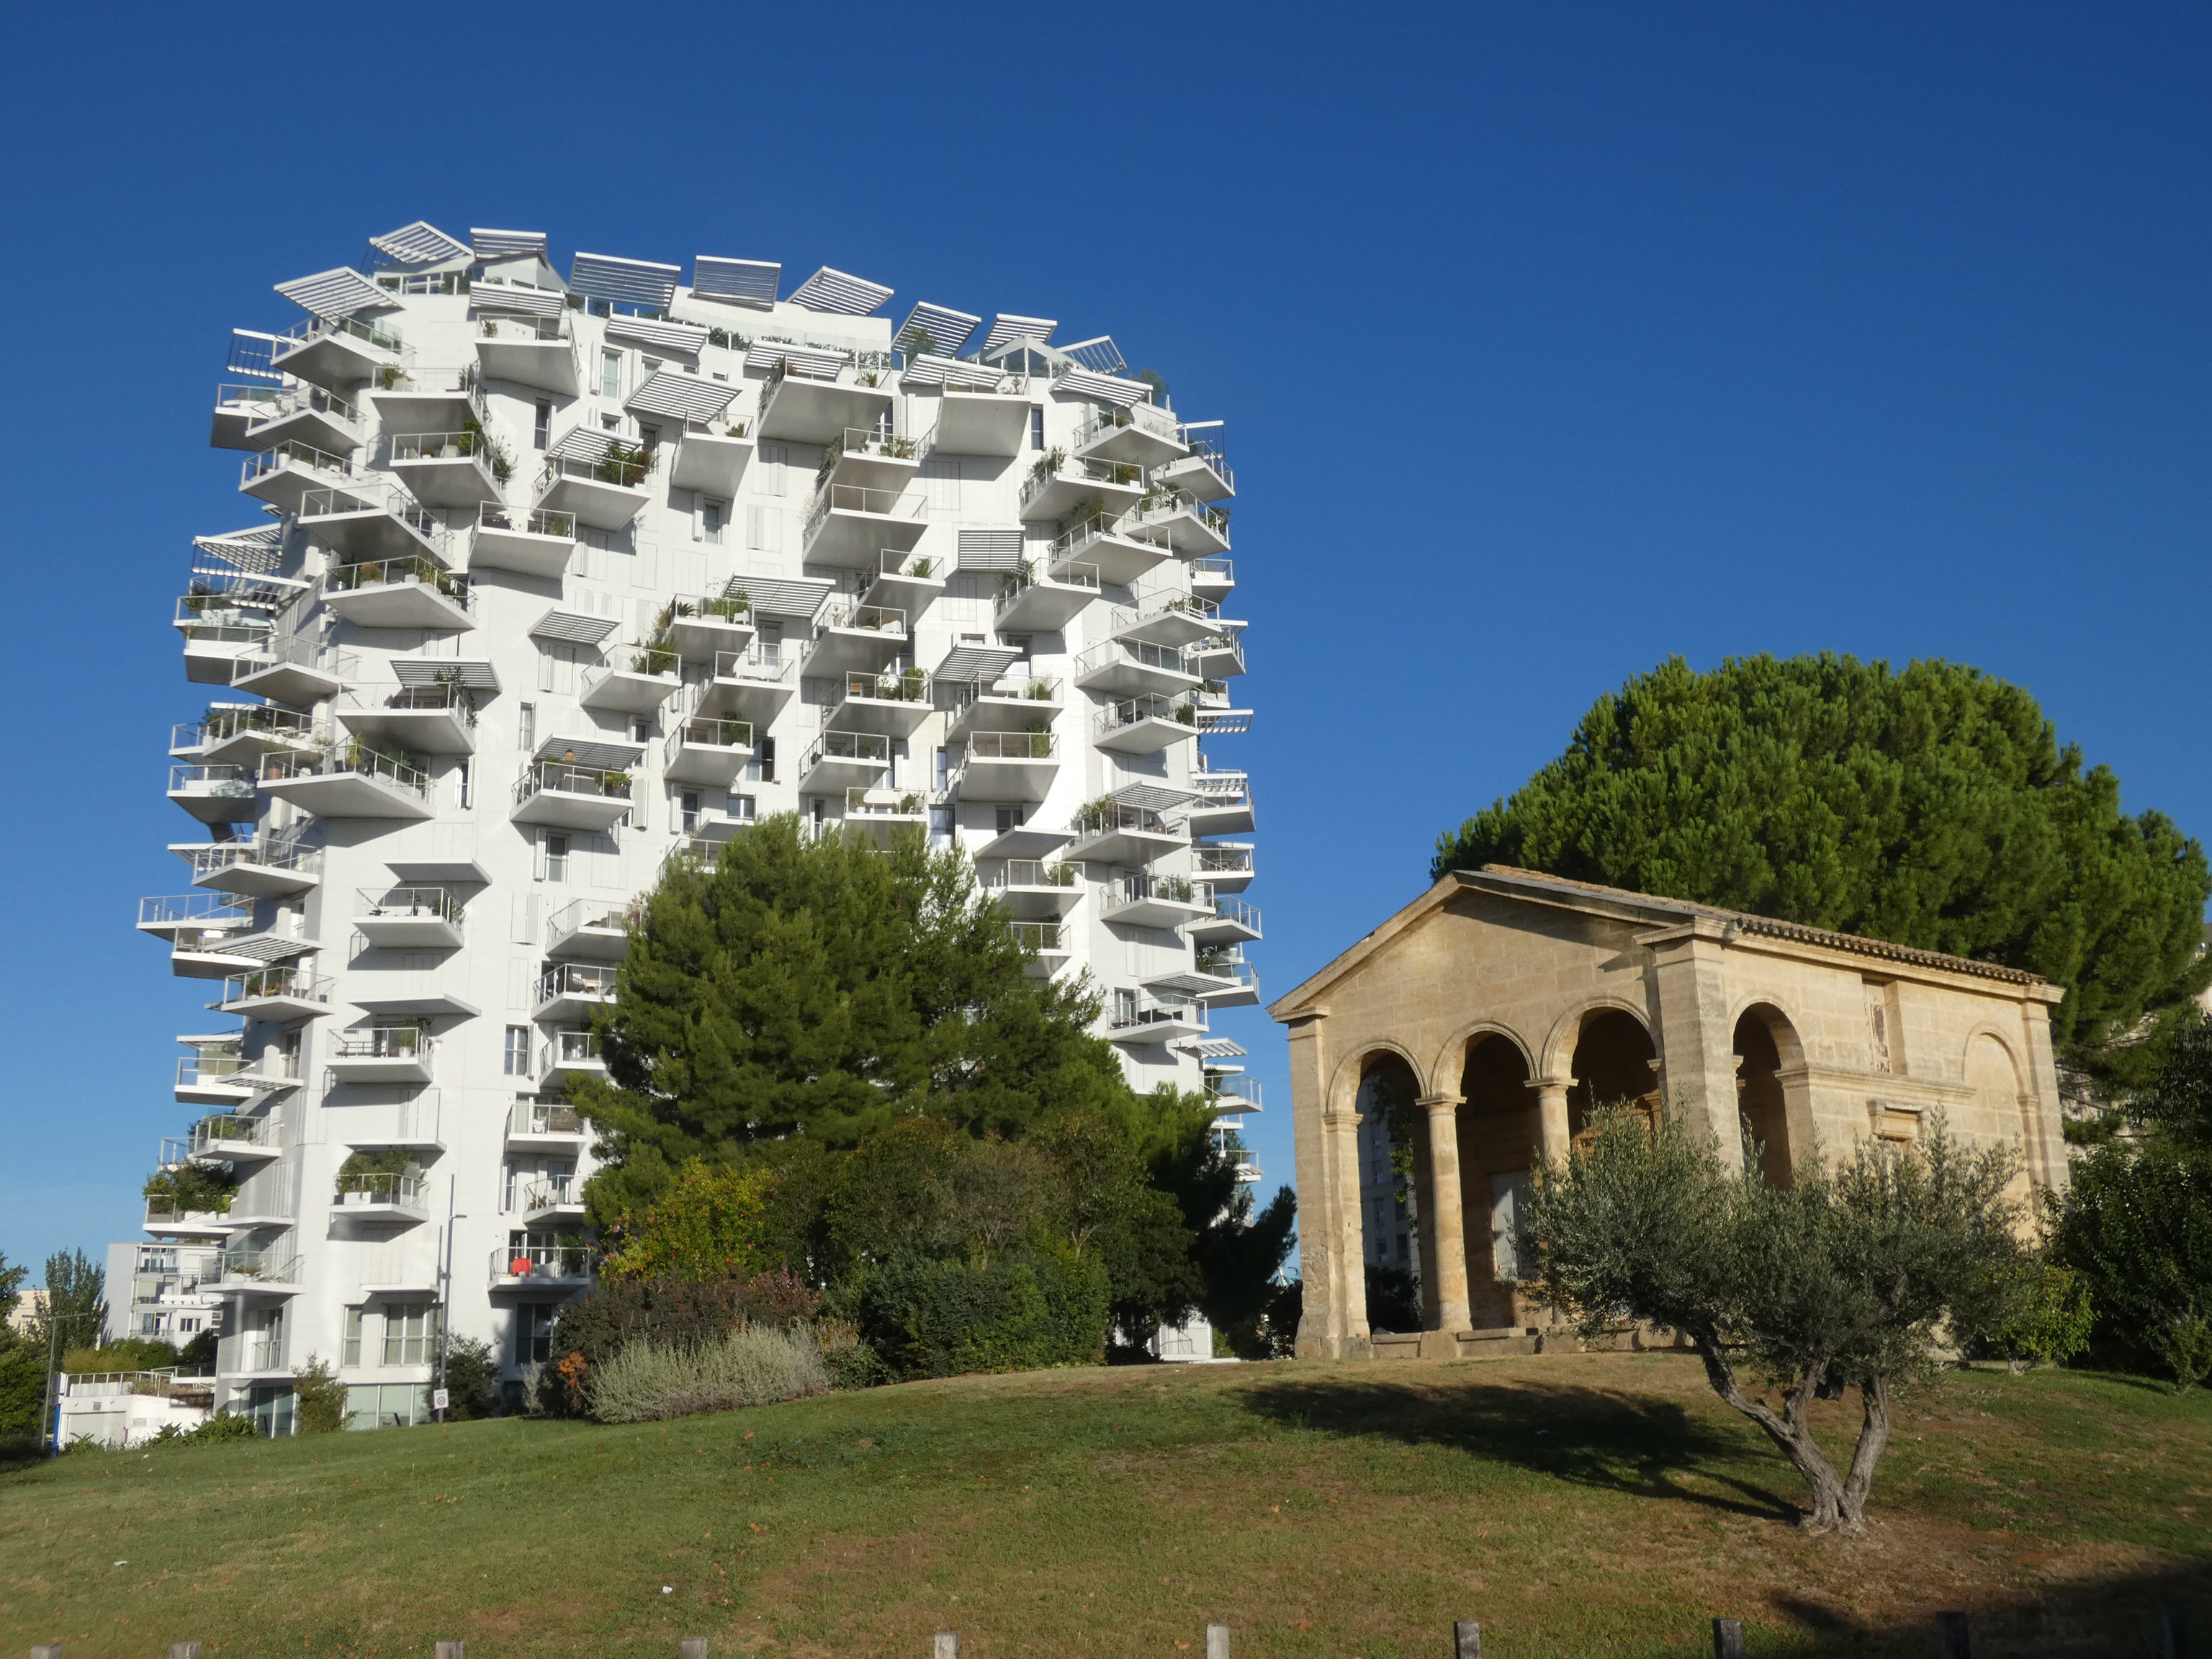 L'Arbre Blanc, Montpellier, Hérault, France, 19 September 2023